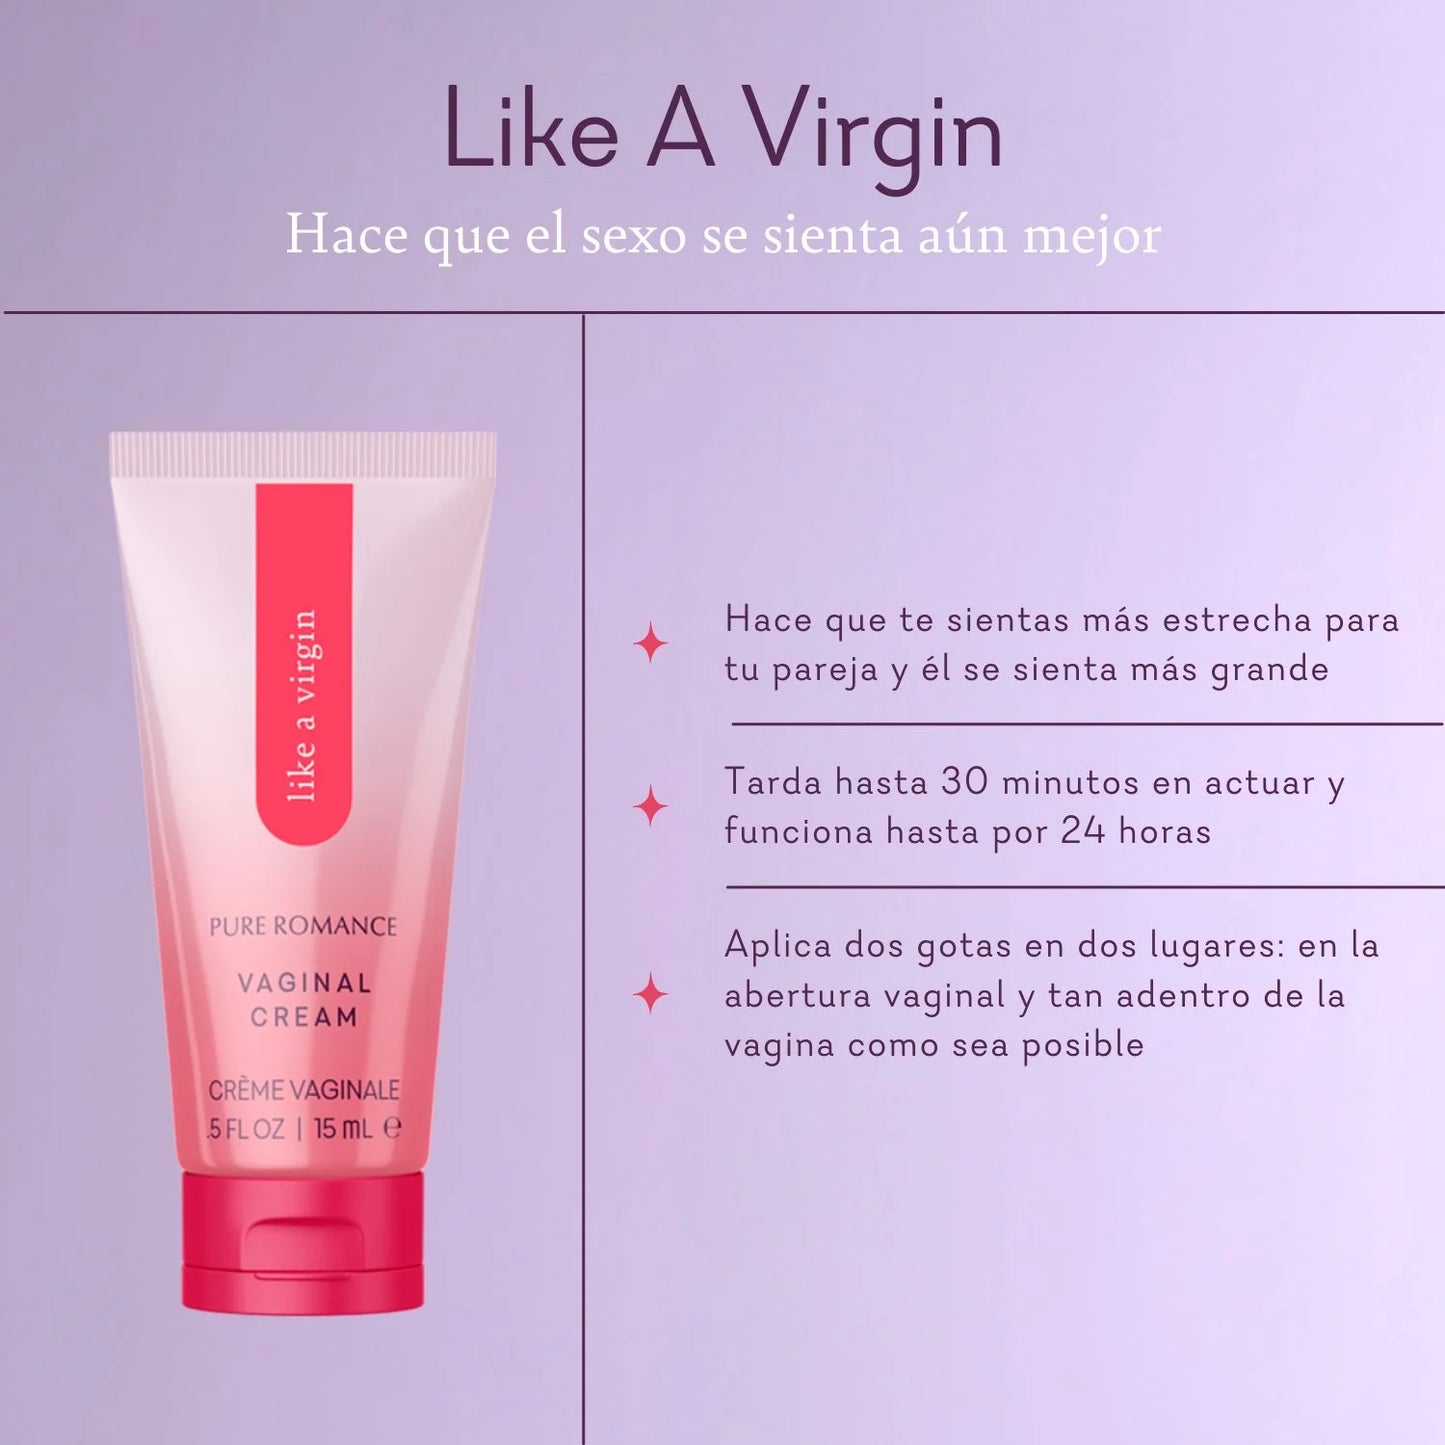 Like a Virgin - Vaginal Cream (Crema estrechante vaginal)